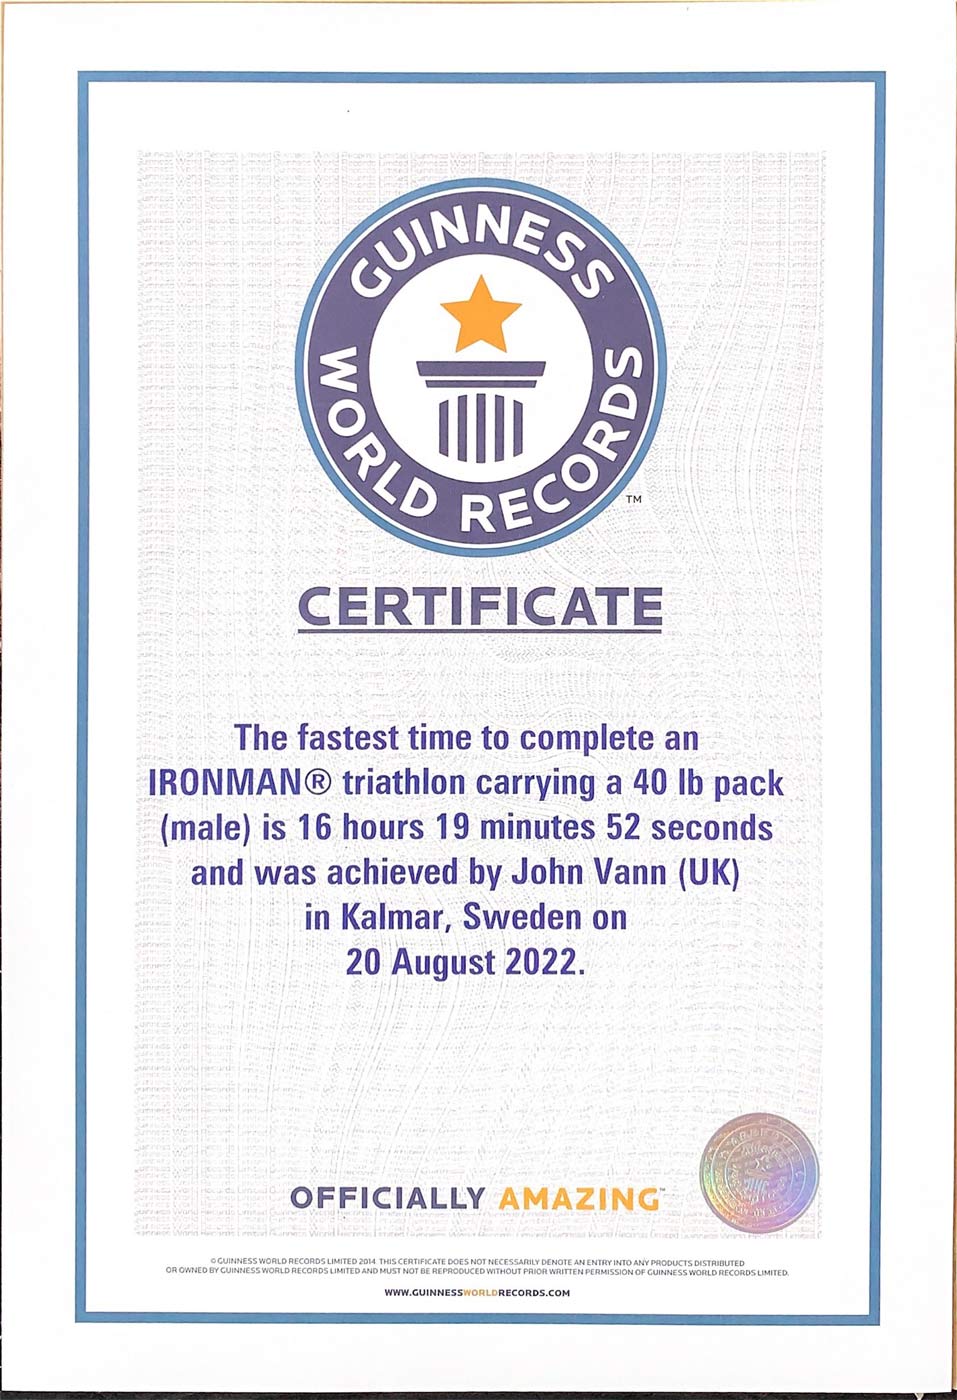 certificate for the ironman triathlon world record